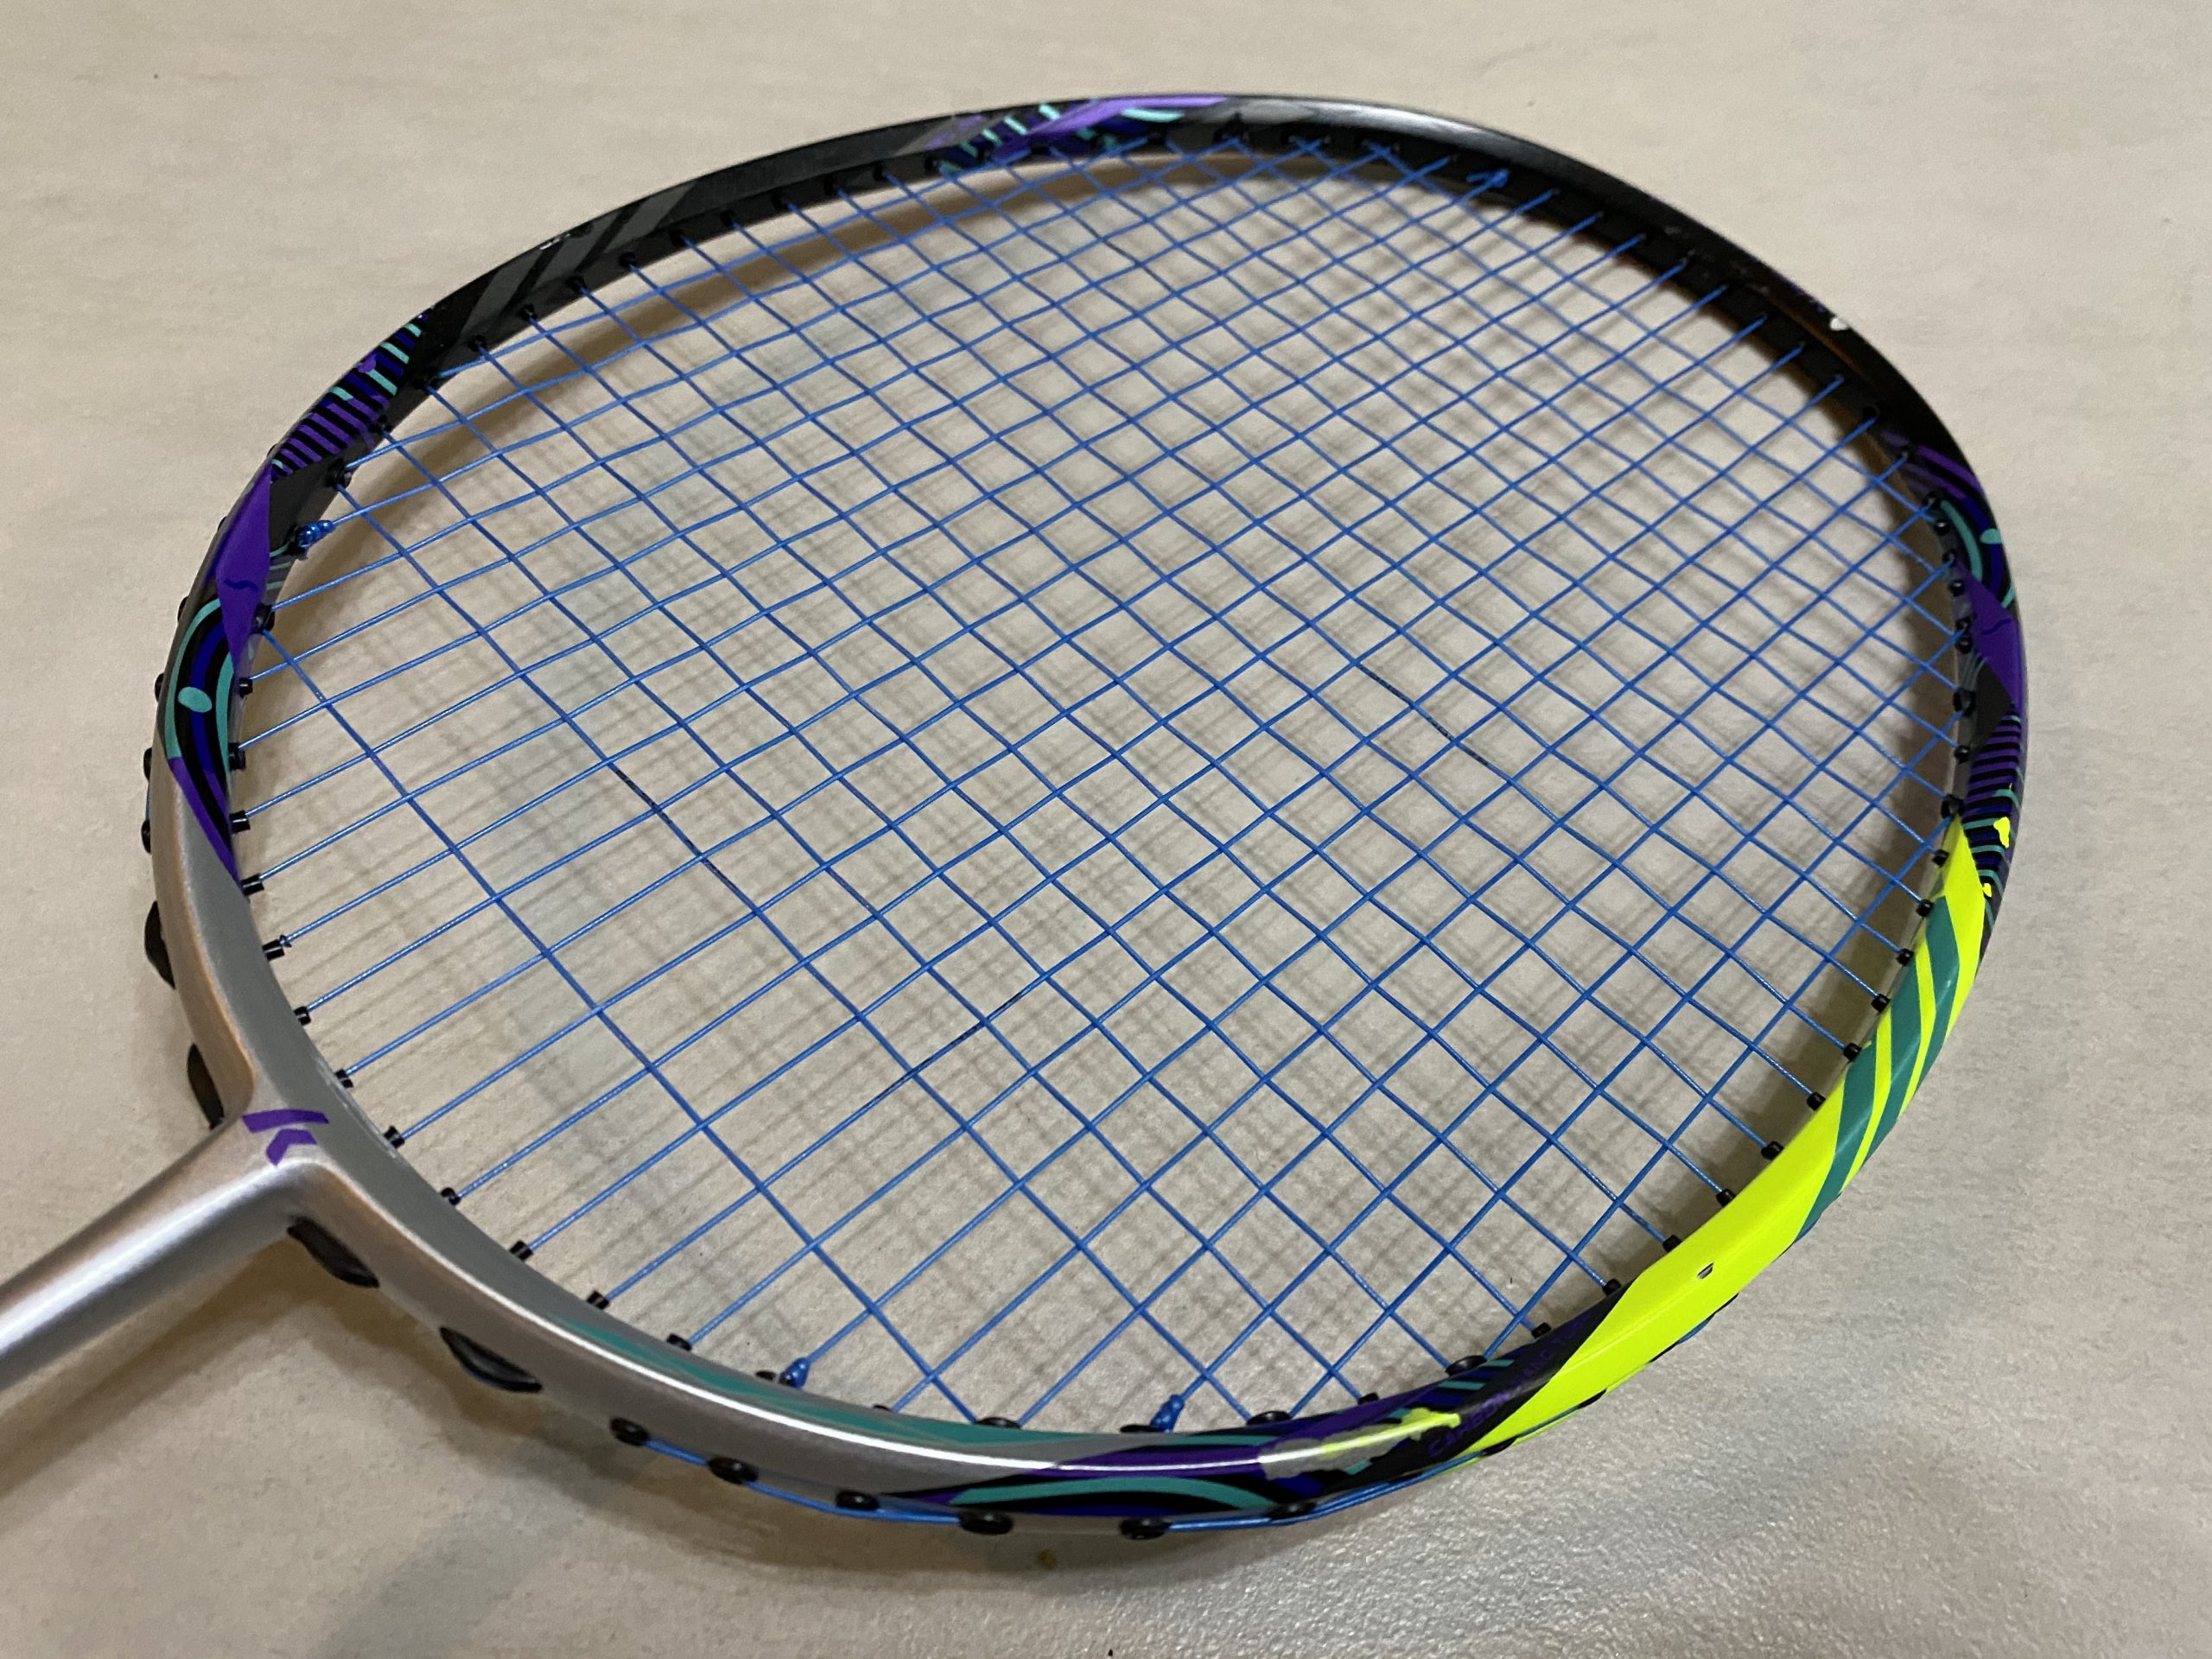 best tennis and badminton racket stringing